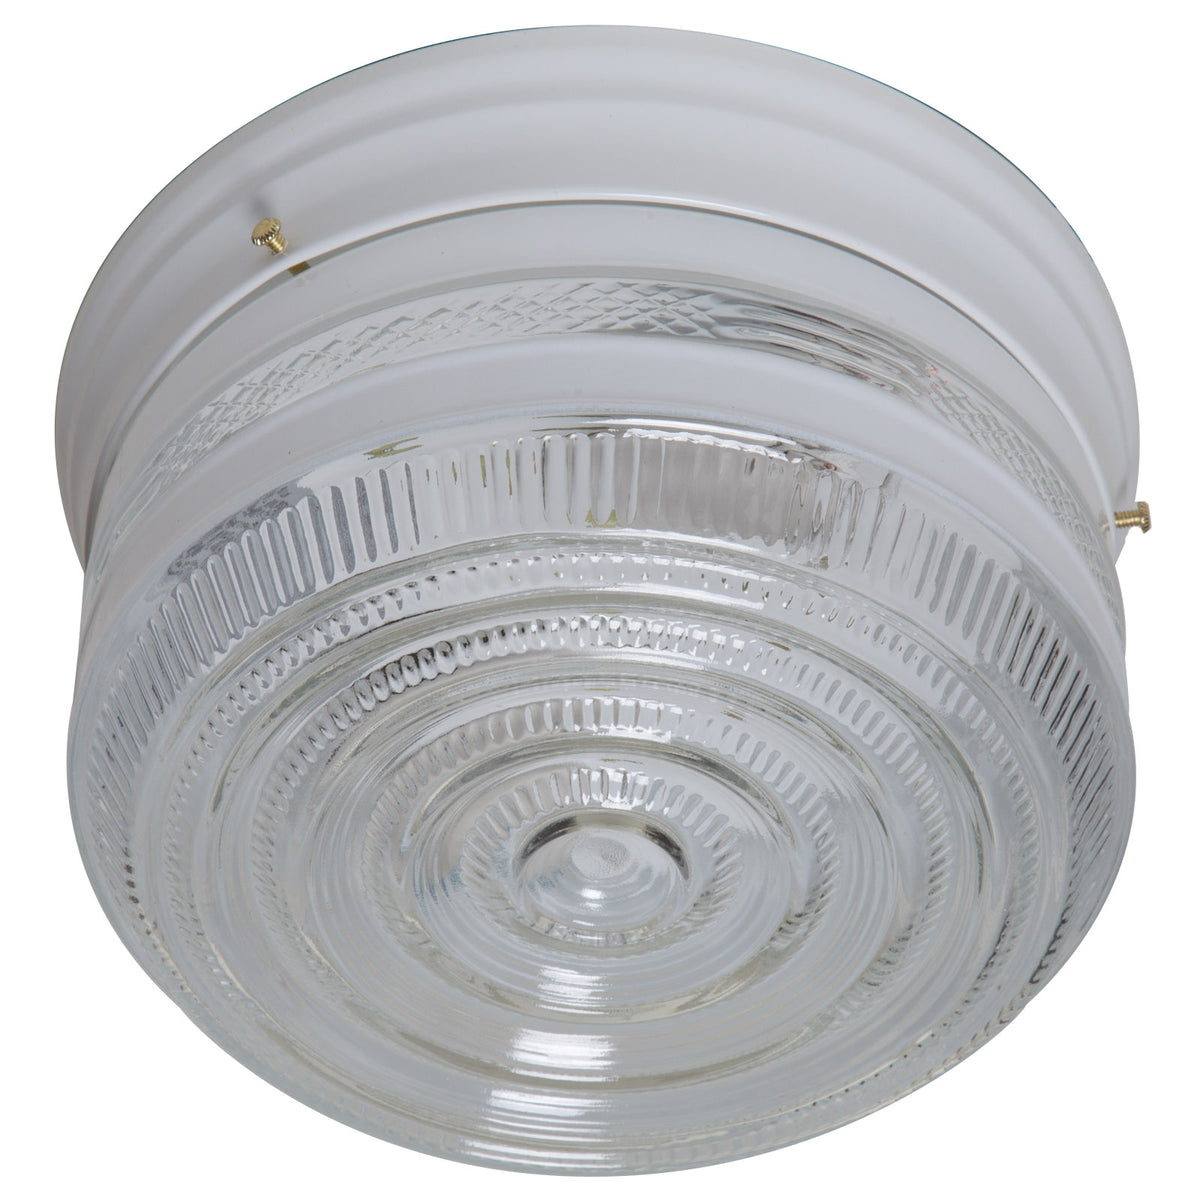 buy ceiling light fixtures at cheap rate in bulk. wholesale & retail lamp supplies store. home décor ideas, maintenance, repair replacement parts